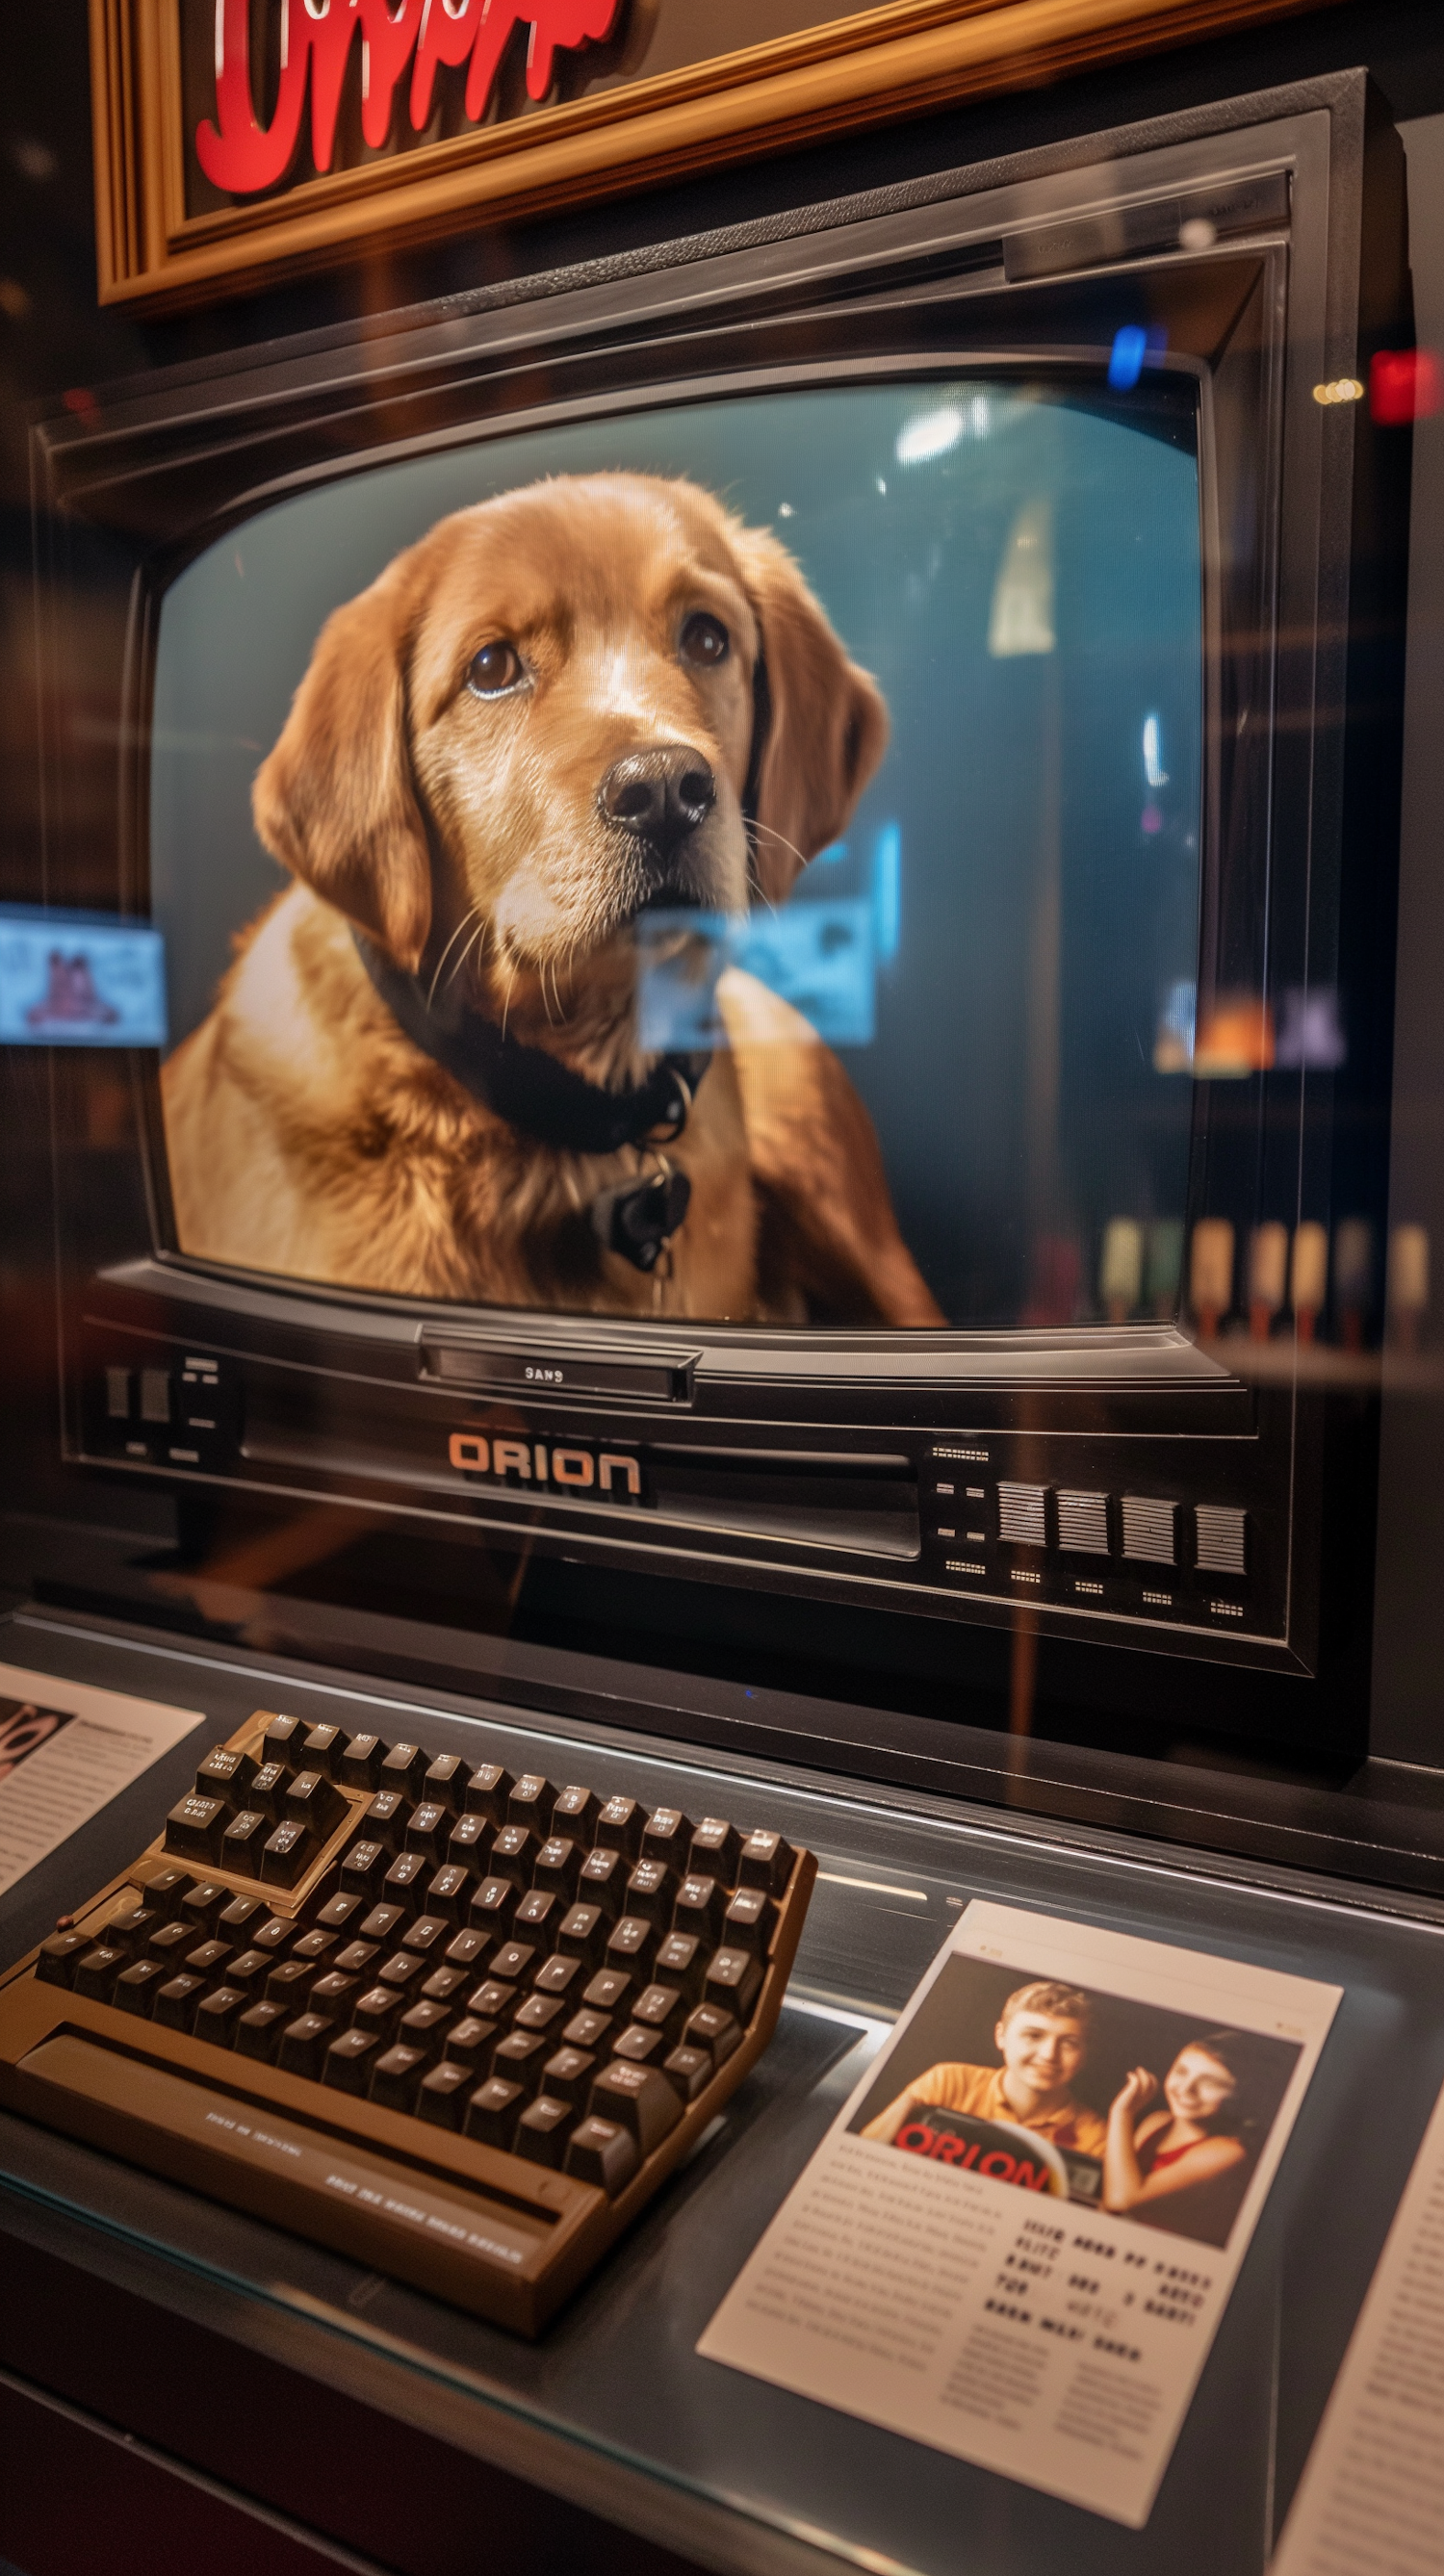 Retro Tech with Dog on Display